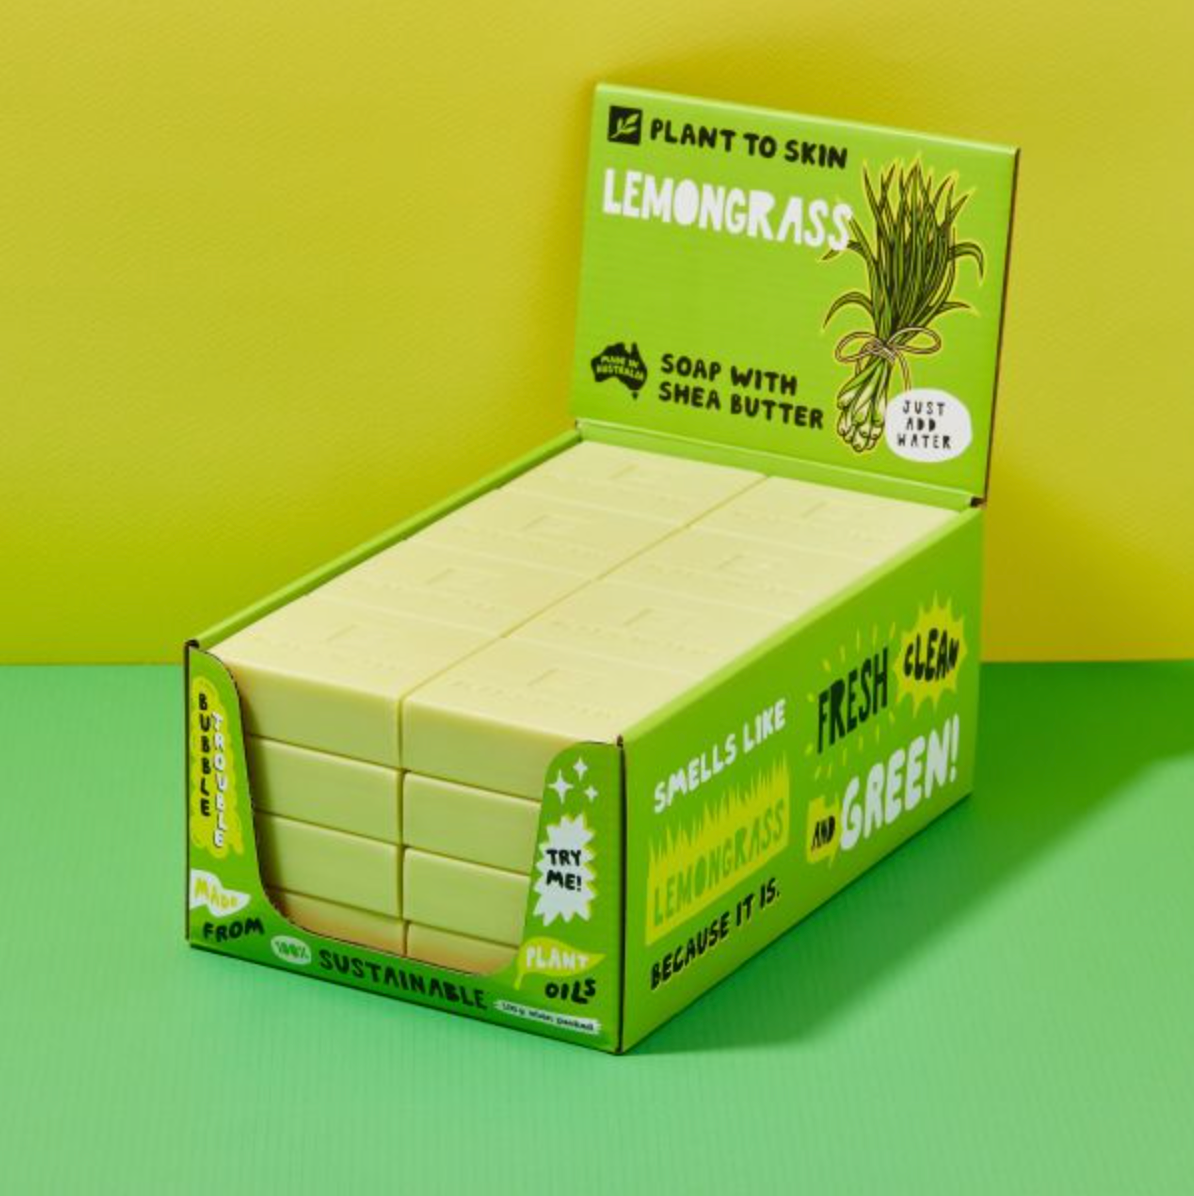 Plant to Skin Lemongrass 100g